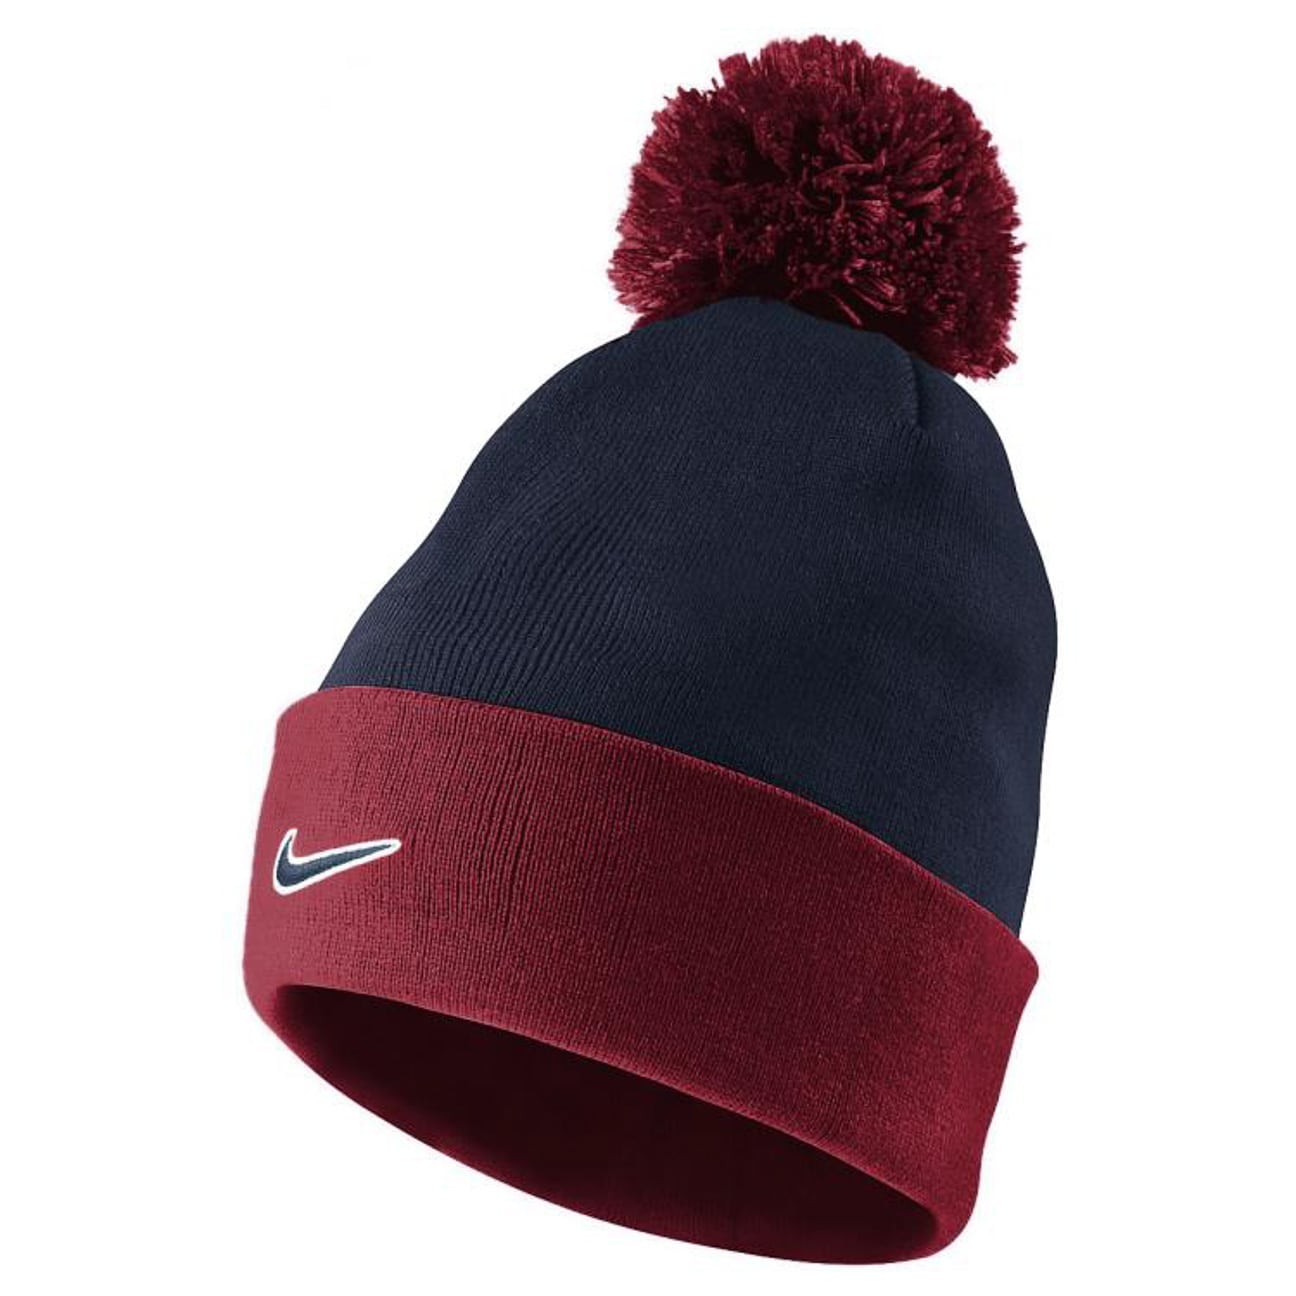 Pom Beanie by Nike, EUR 17,95 --> Hats, caps & beanies shop online ...